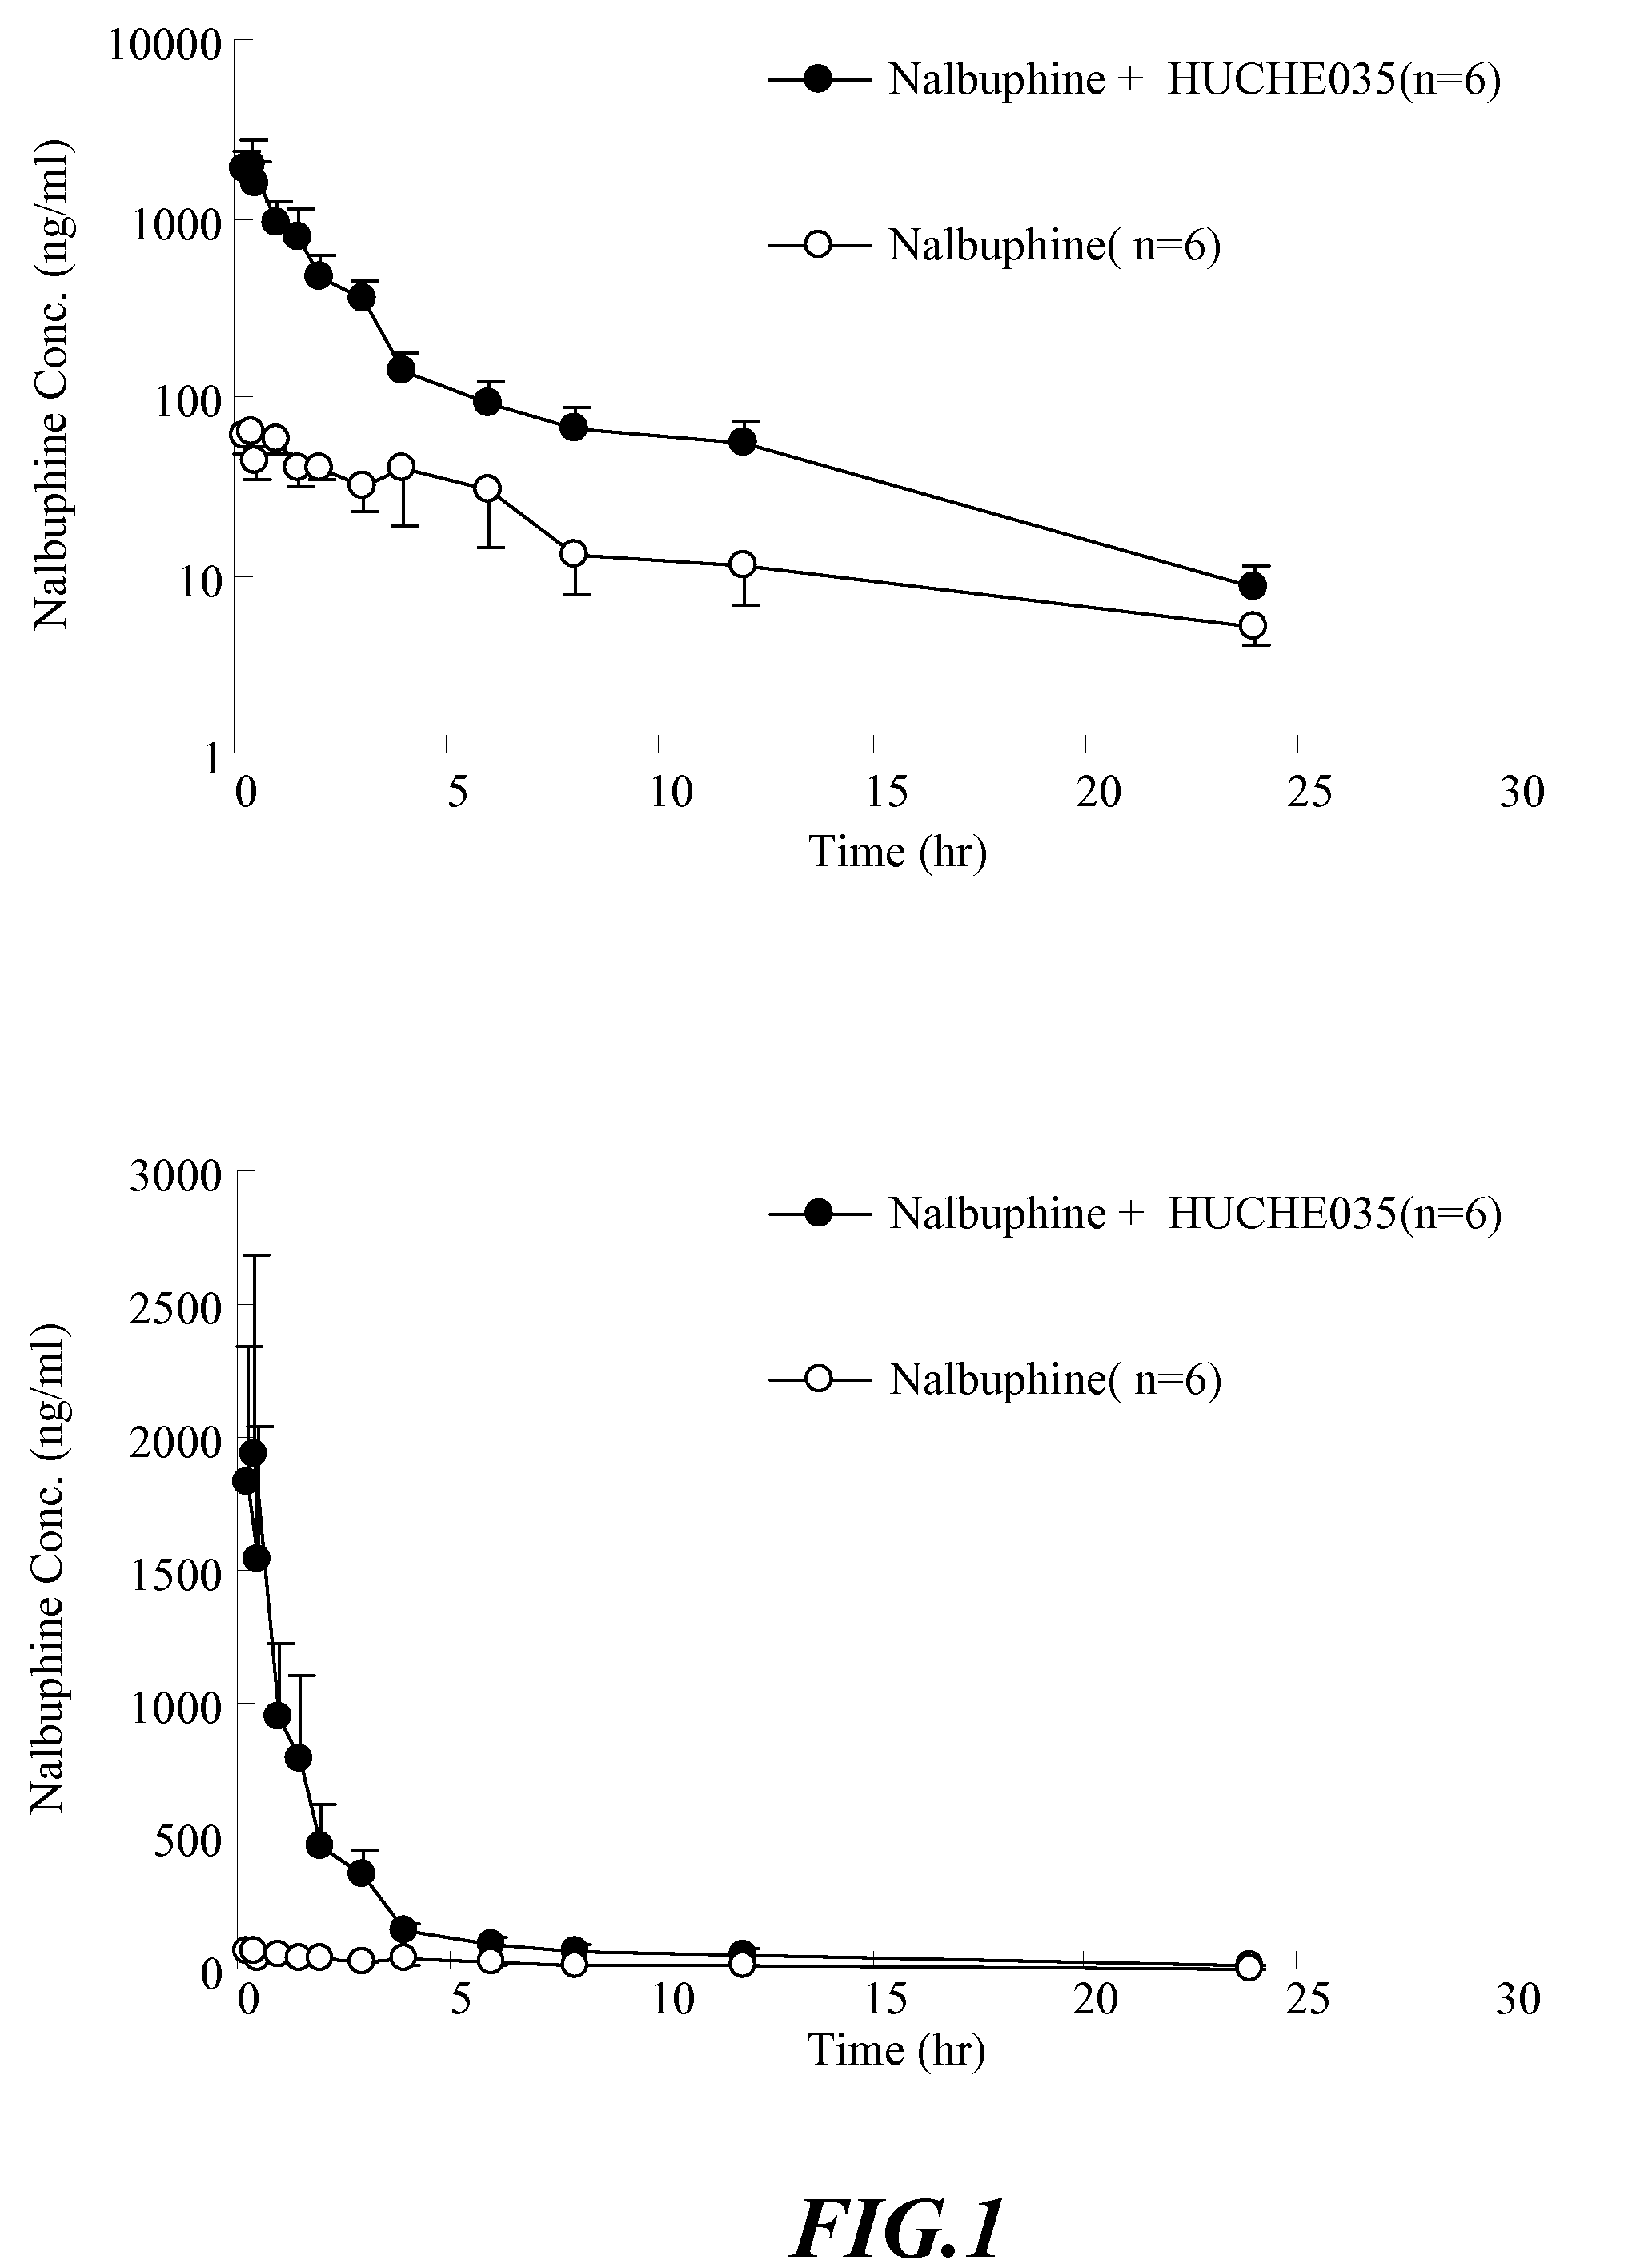 Inhibitors and Enhancers of Uridine Diphosphate-Glucuronosyltransferase 2B (UGT2B)